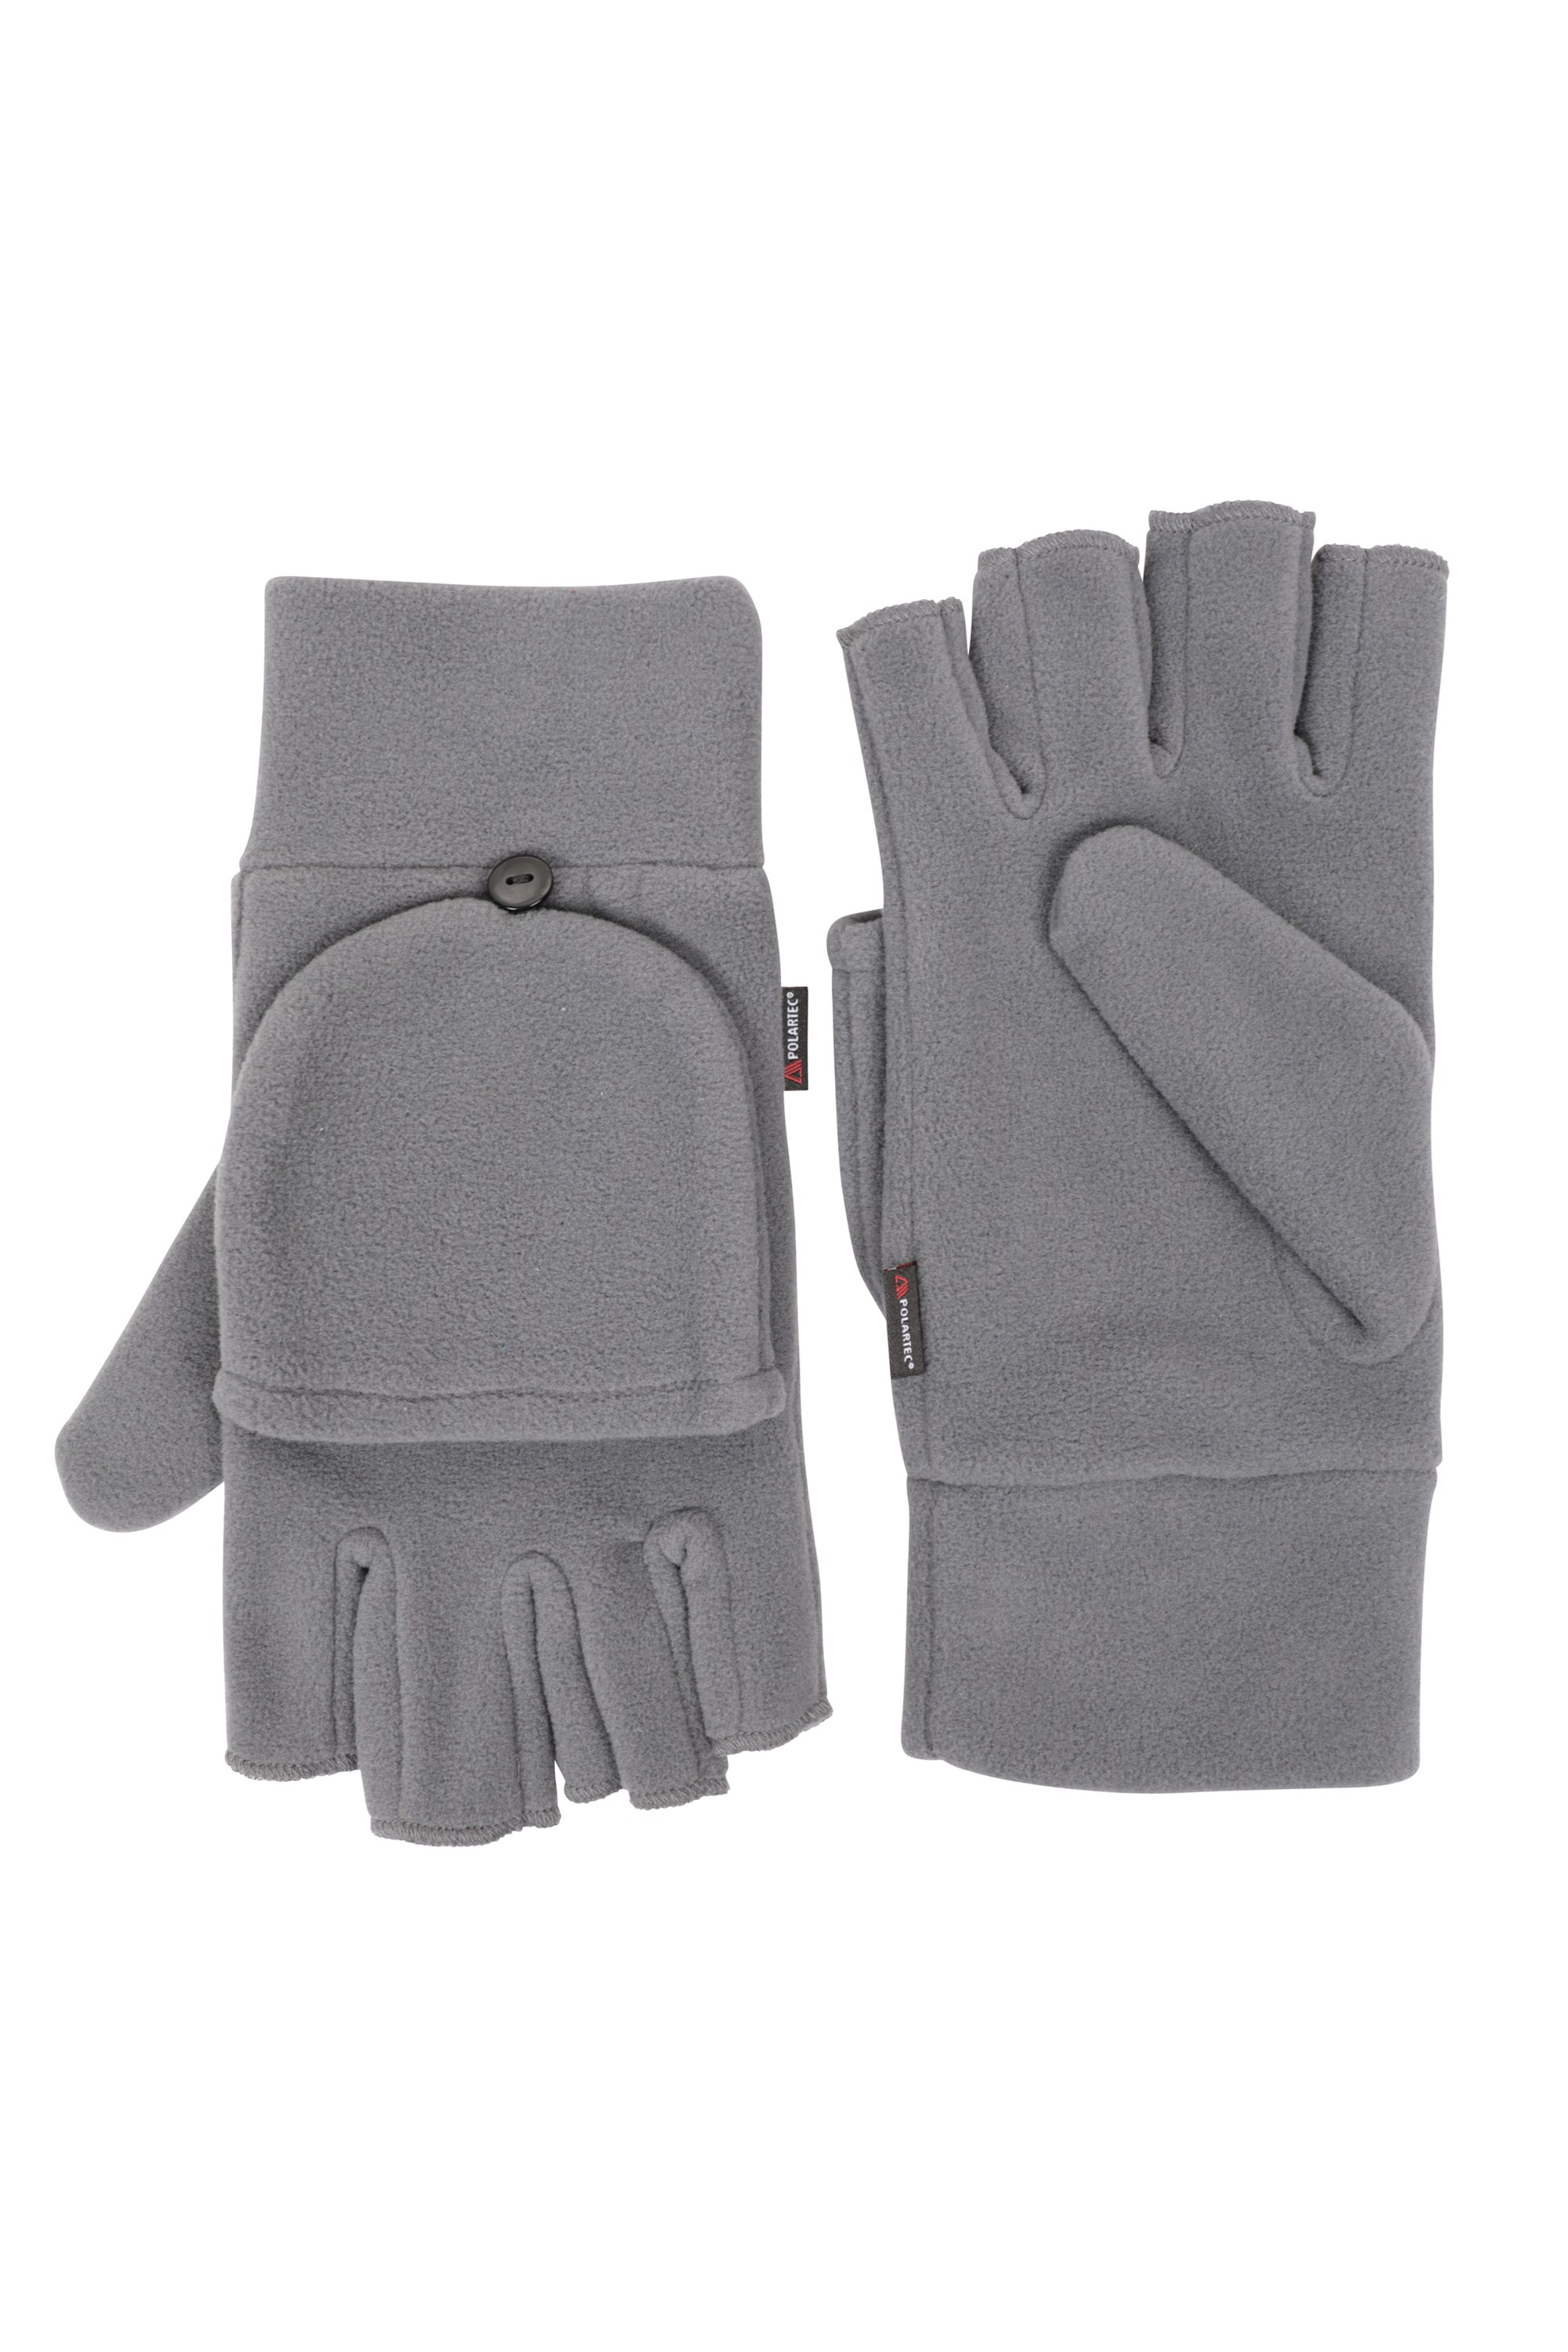 Mountain Warehouse Universal Fingerless Fishing Gloves Khaki Medium, Fishing  Gloves -  Canada